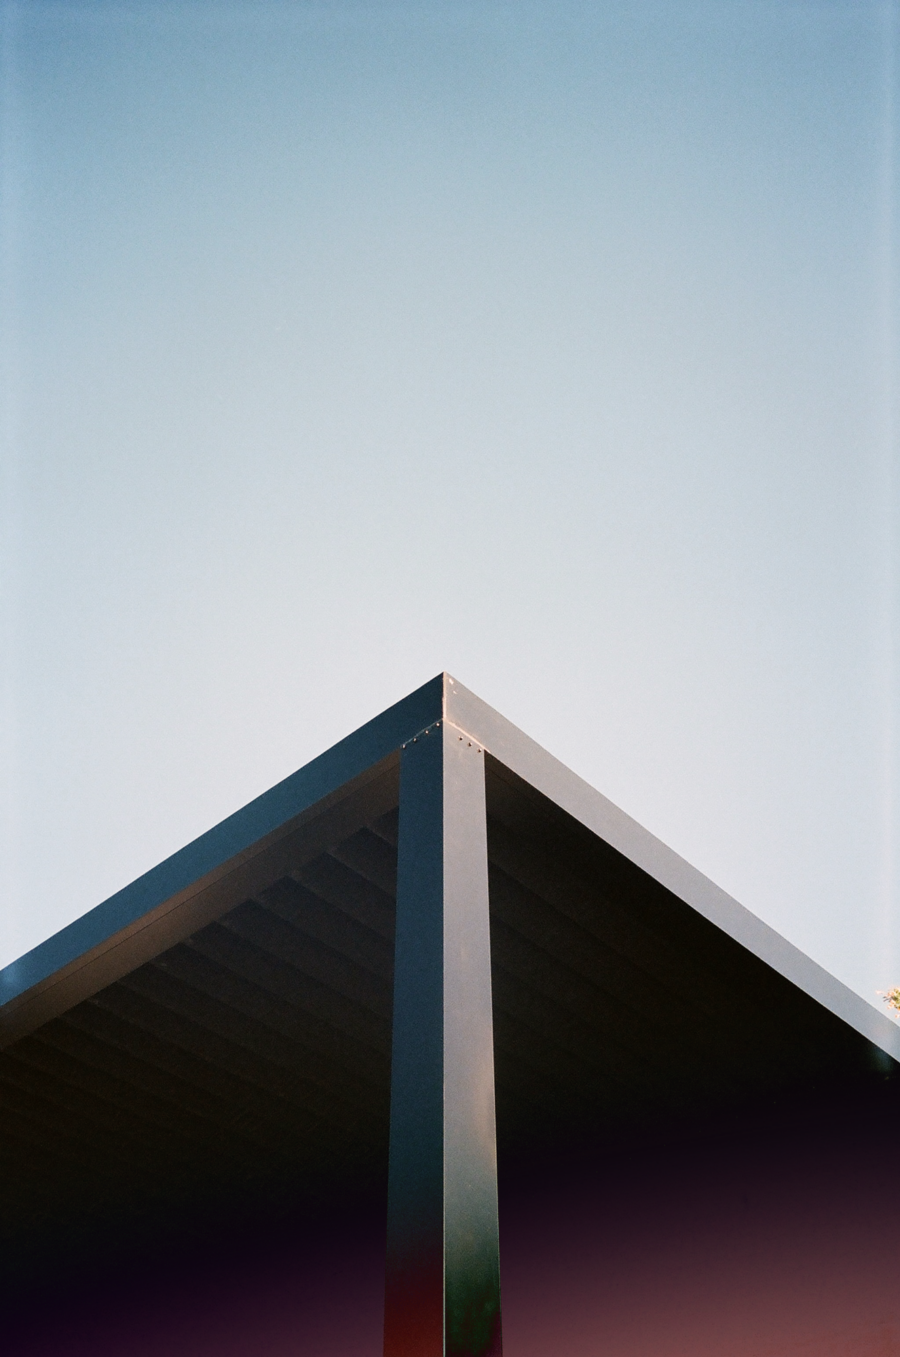 A dark triangular roof corner against a clear, blue sky.